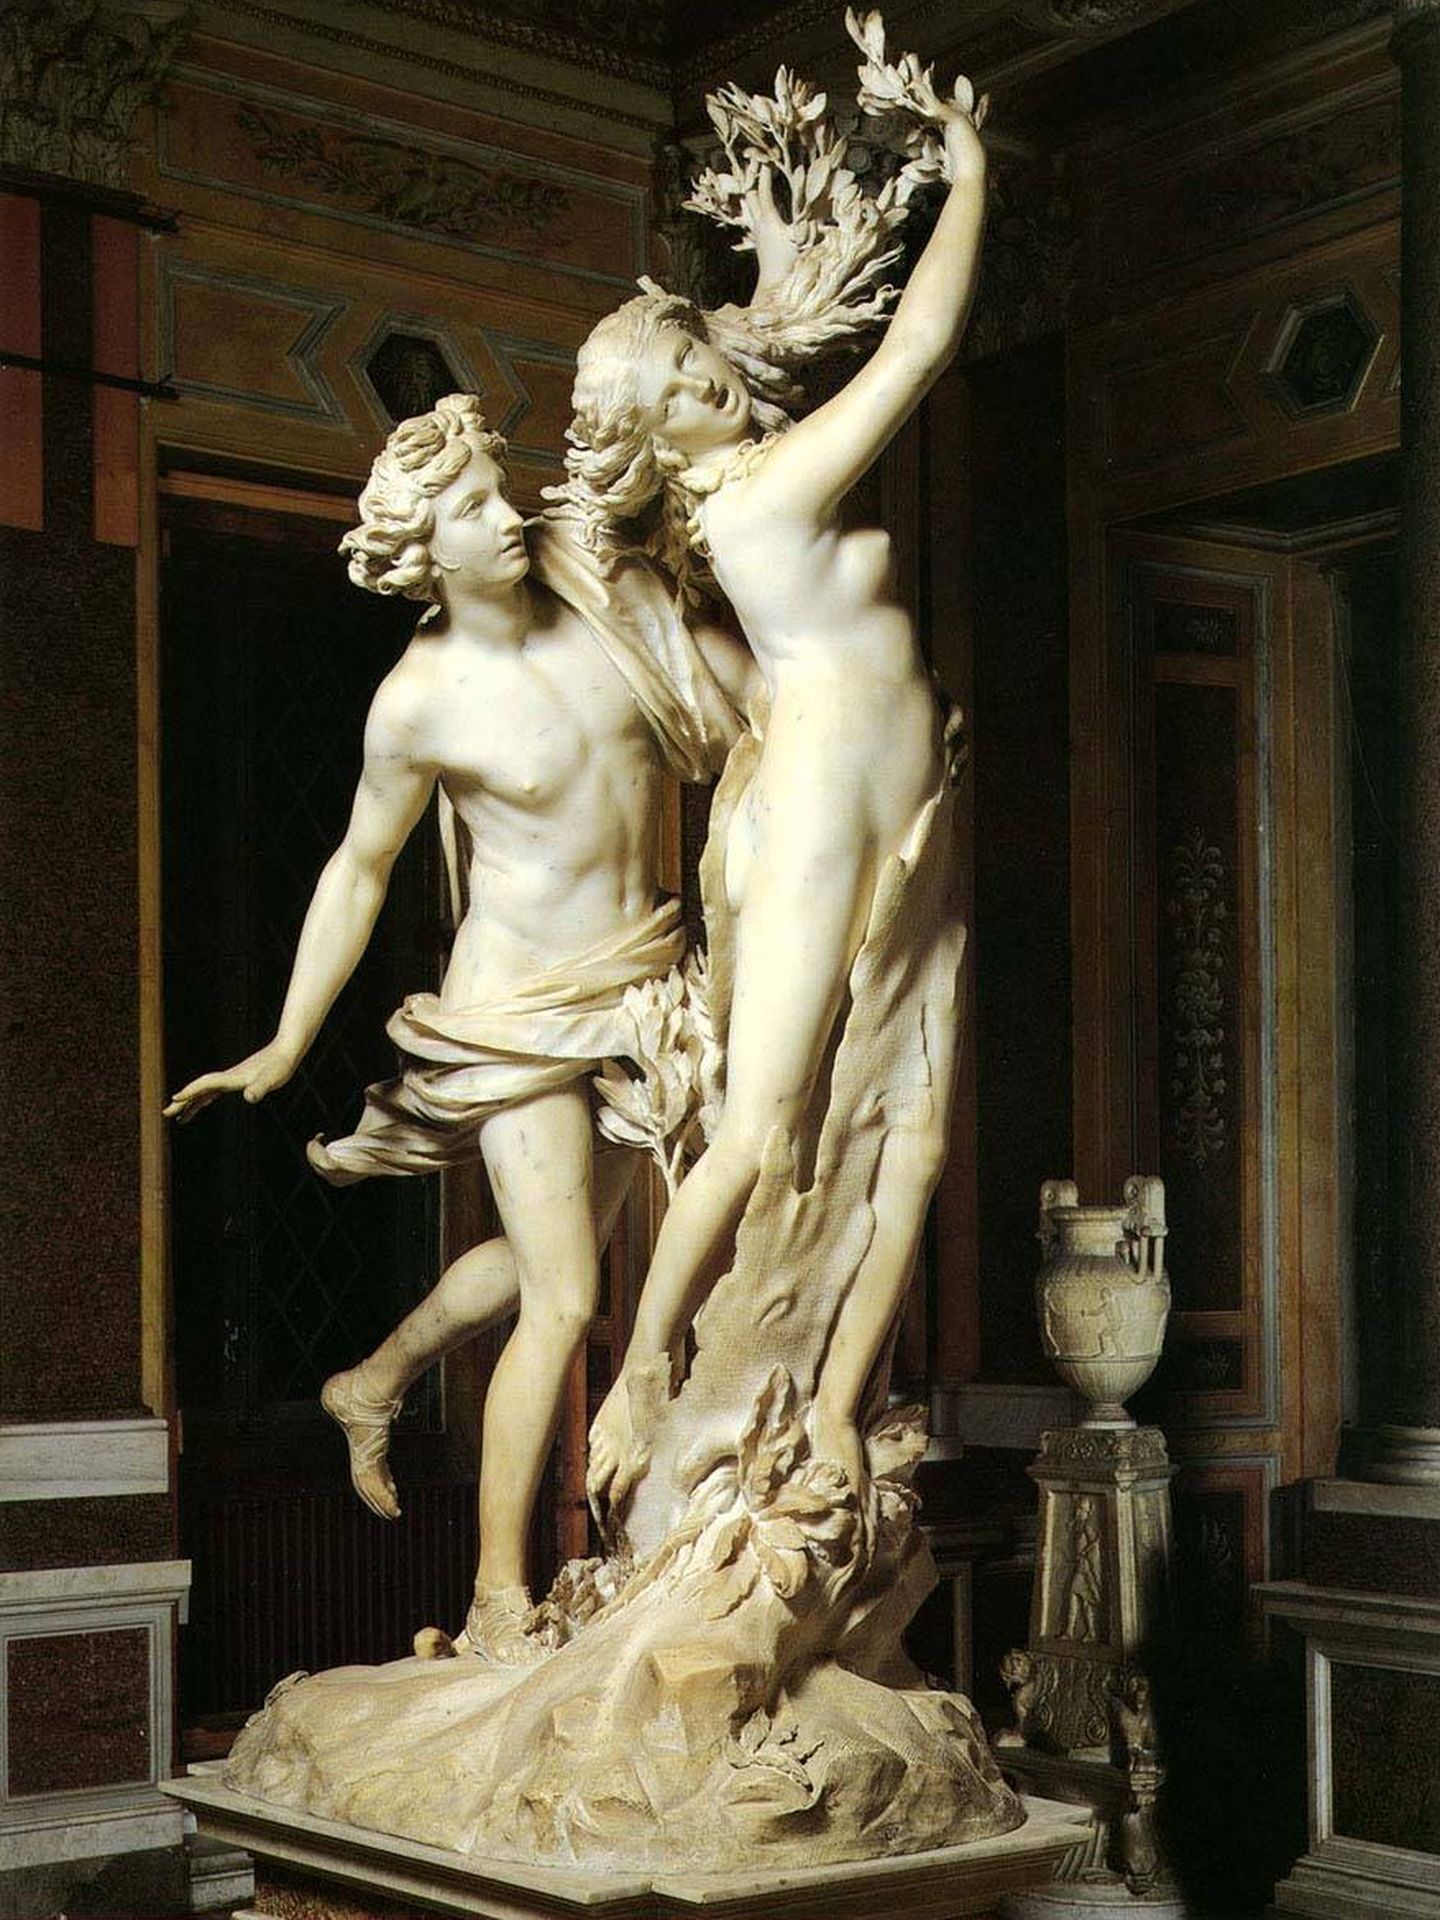  La escultura de Bernini.